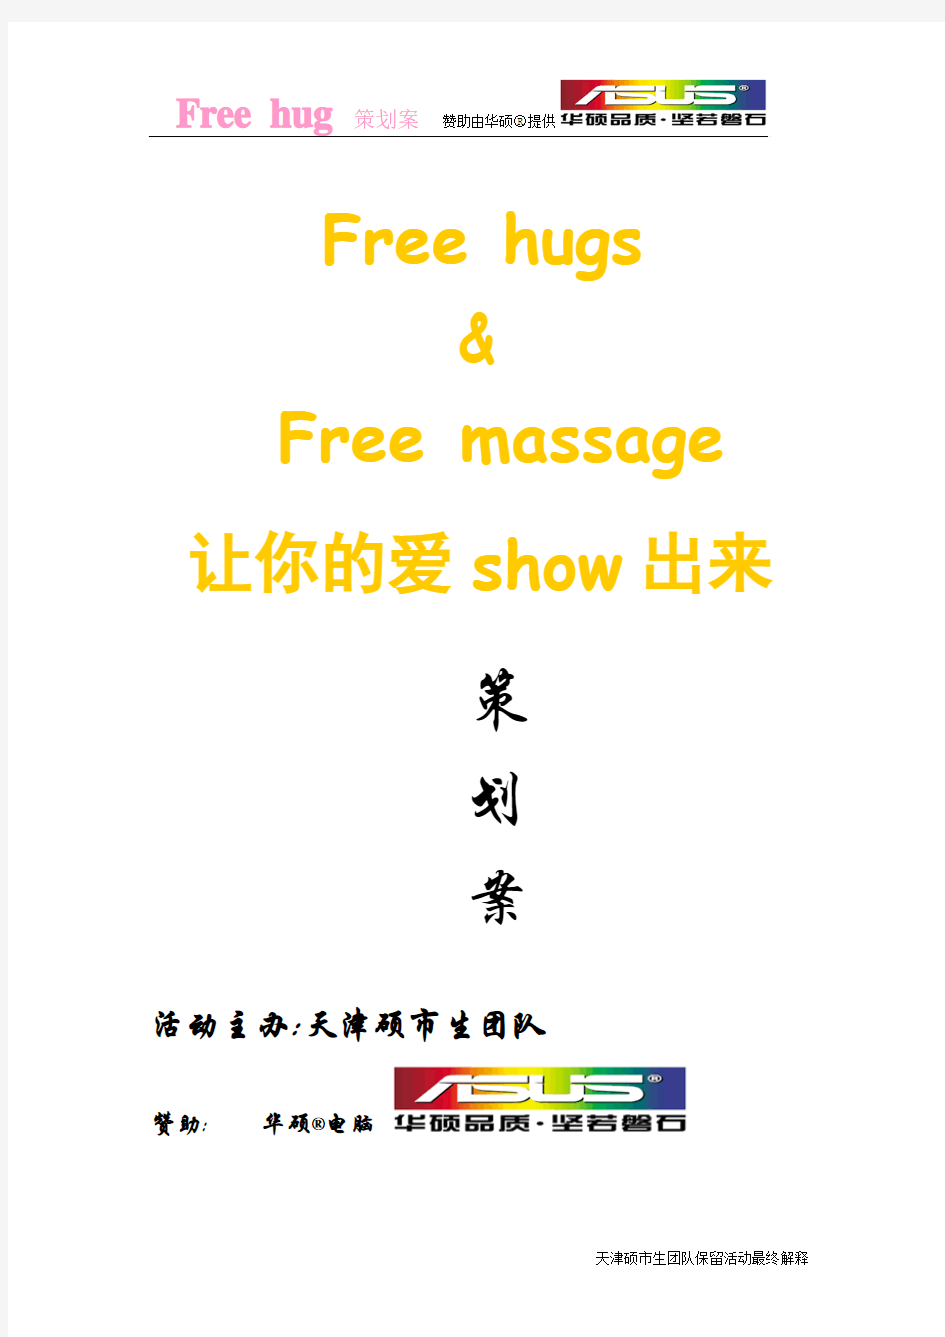 六周年活动策划案(free hug&free massage)